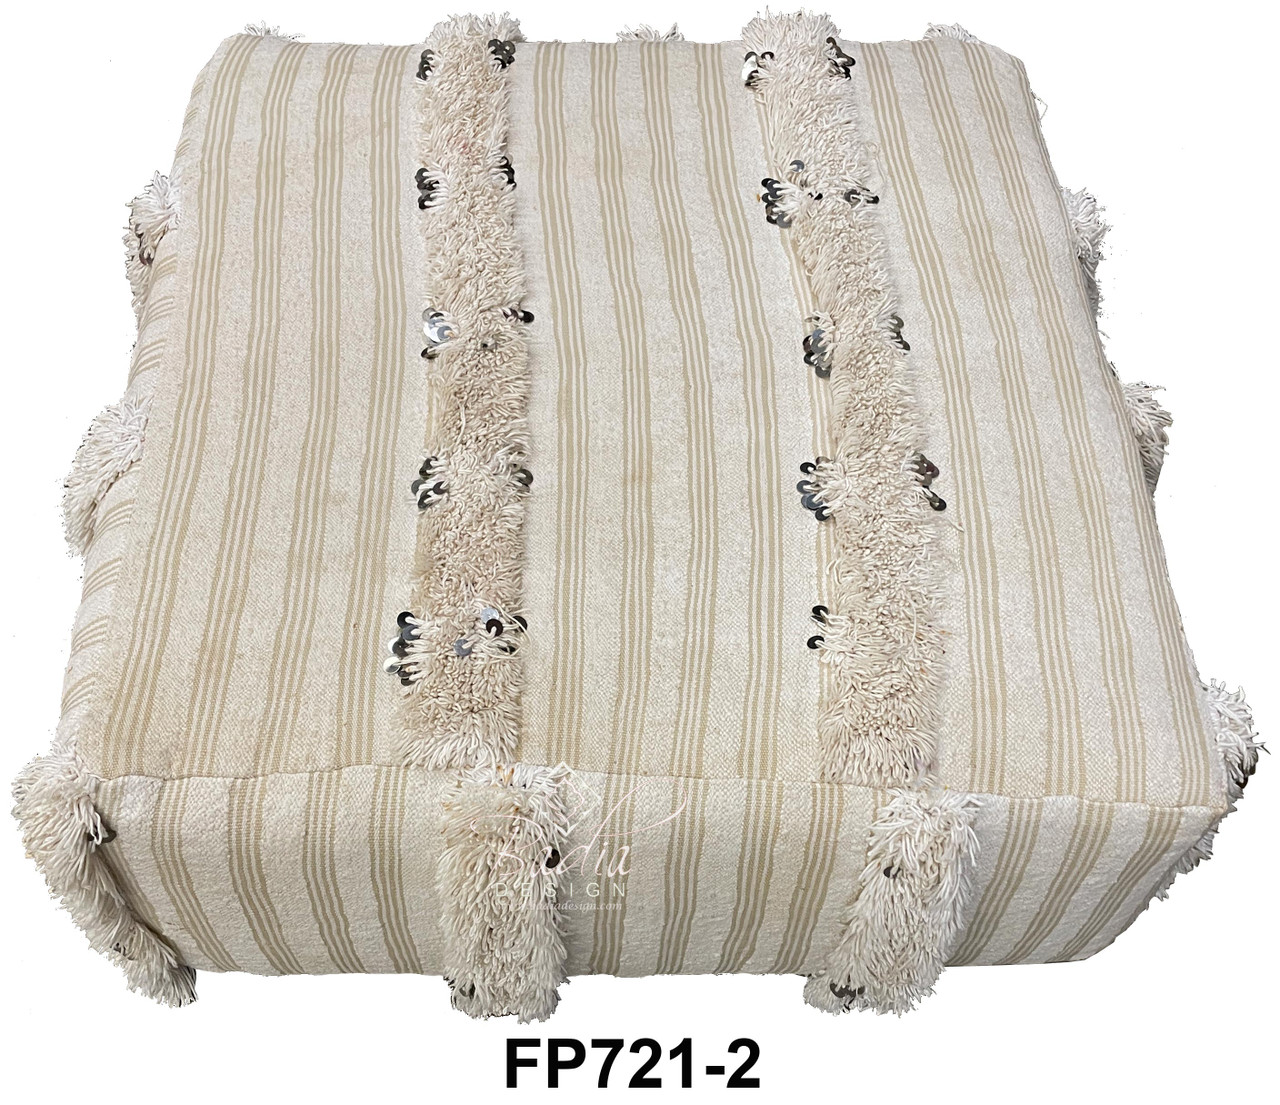 Square Shaped Wedding Floor Cushion - FP721